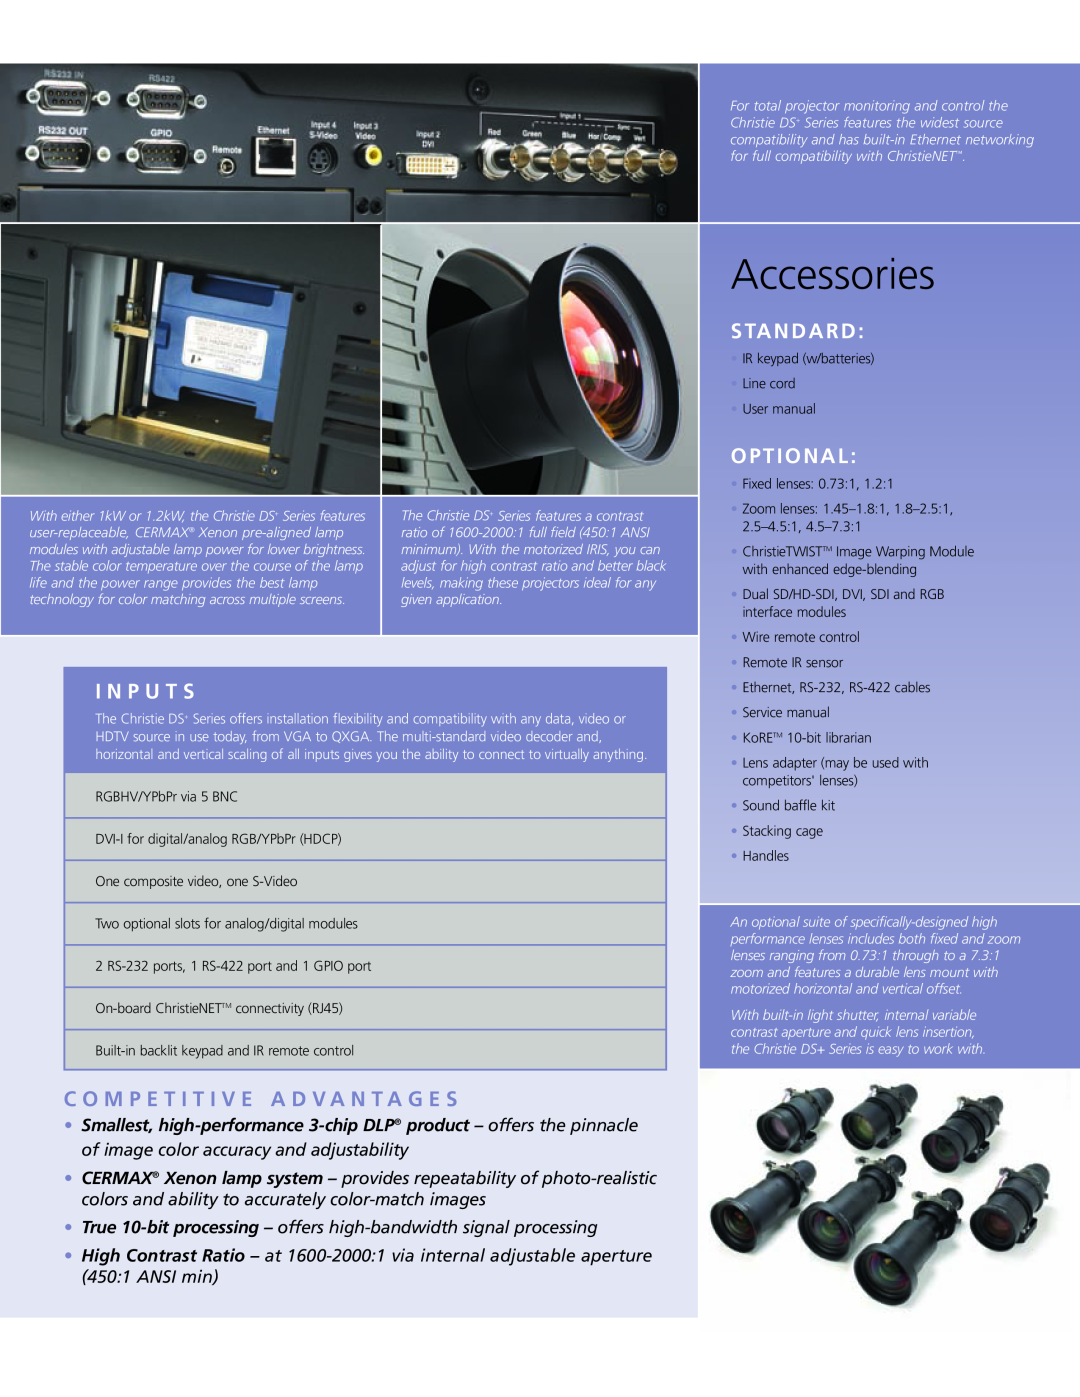 Christie Digital Systems DS+ Series manual Accessories, C O M P E T I T I V E A D V A N T A G E S, I N P U T S, Standard 